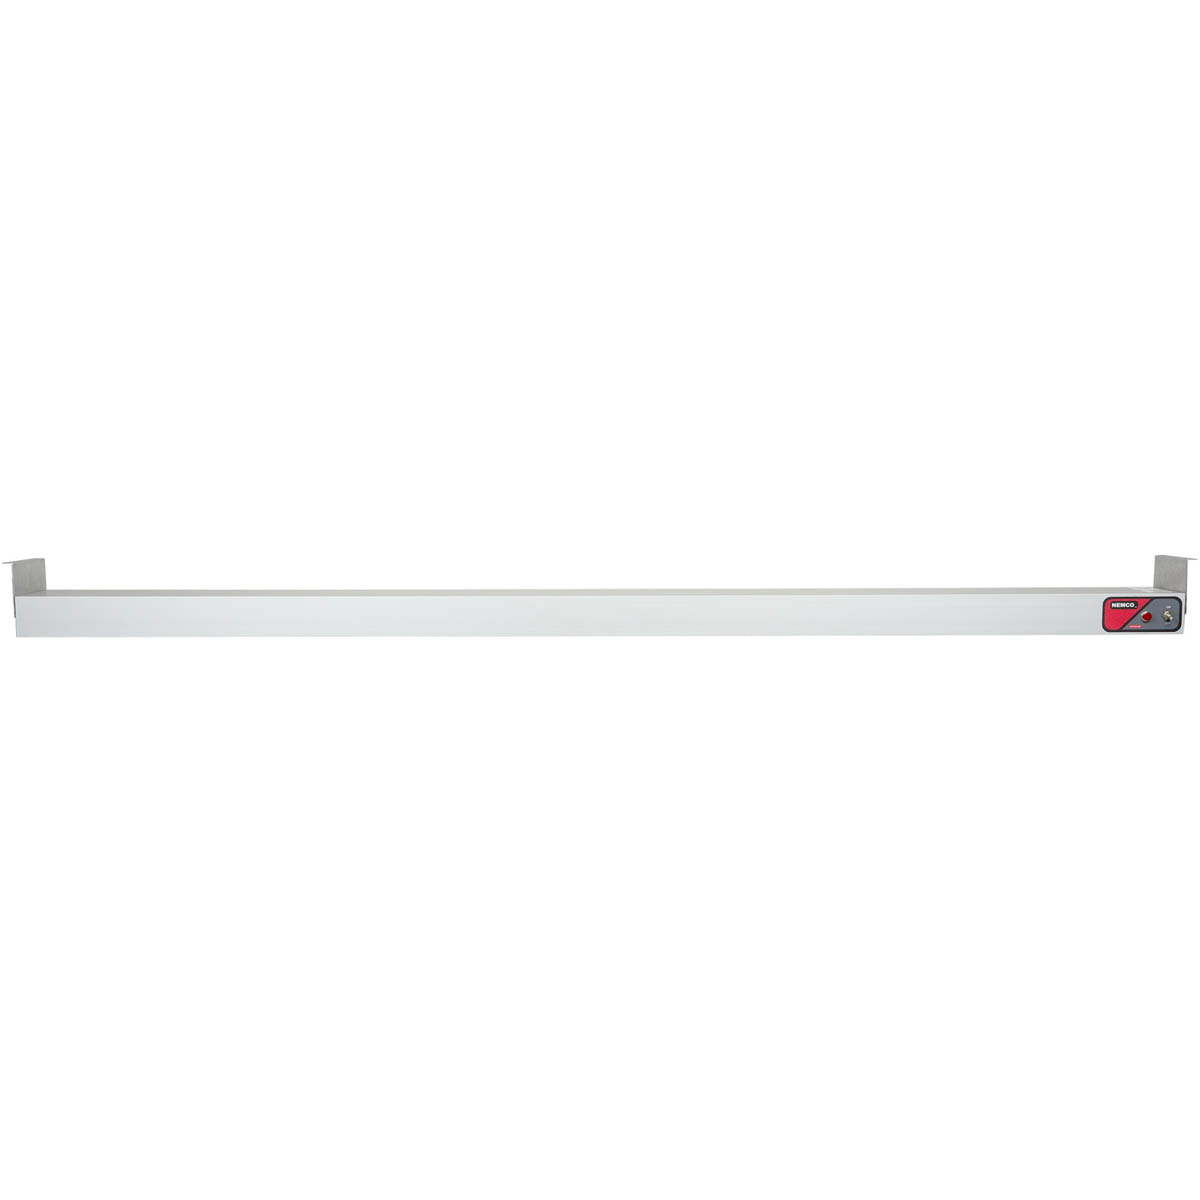 Nemco 6150-72-CP Strip Type Heat Lamp